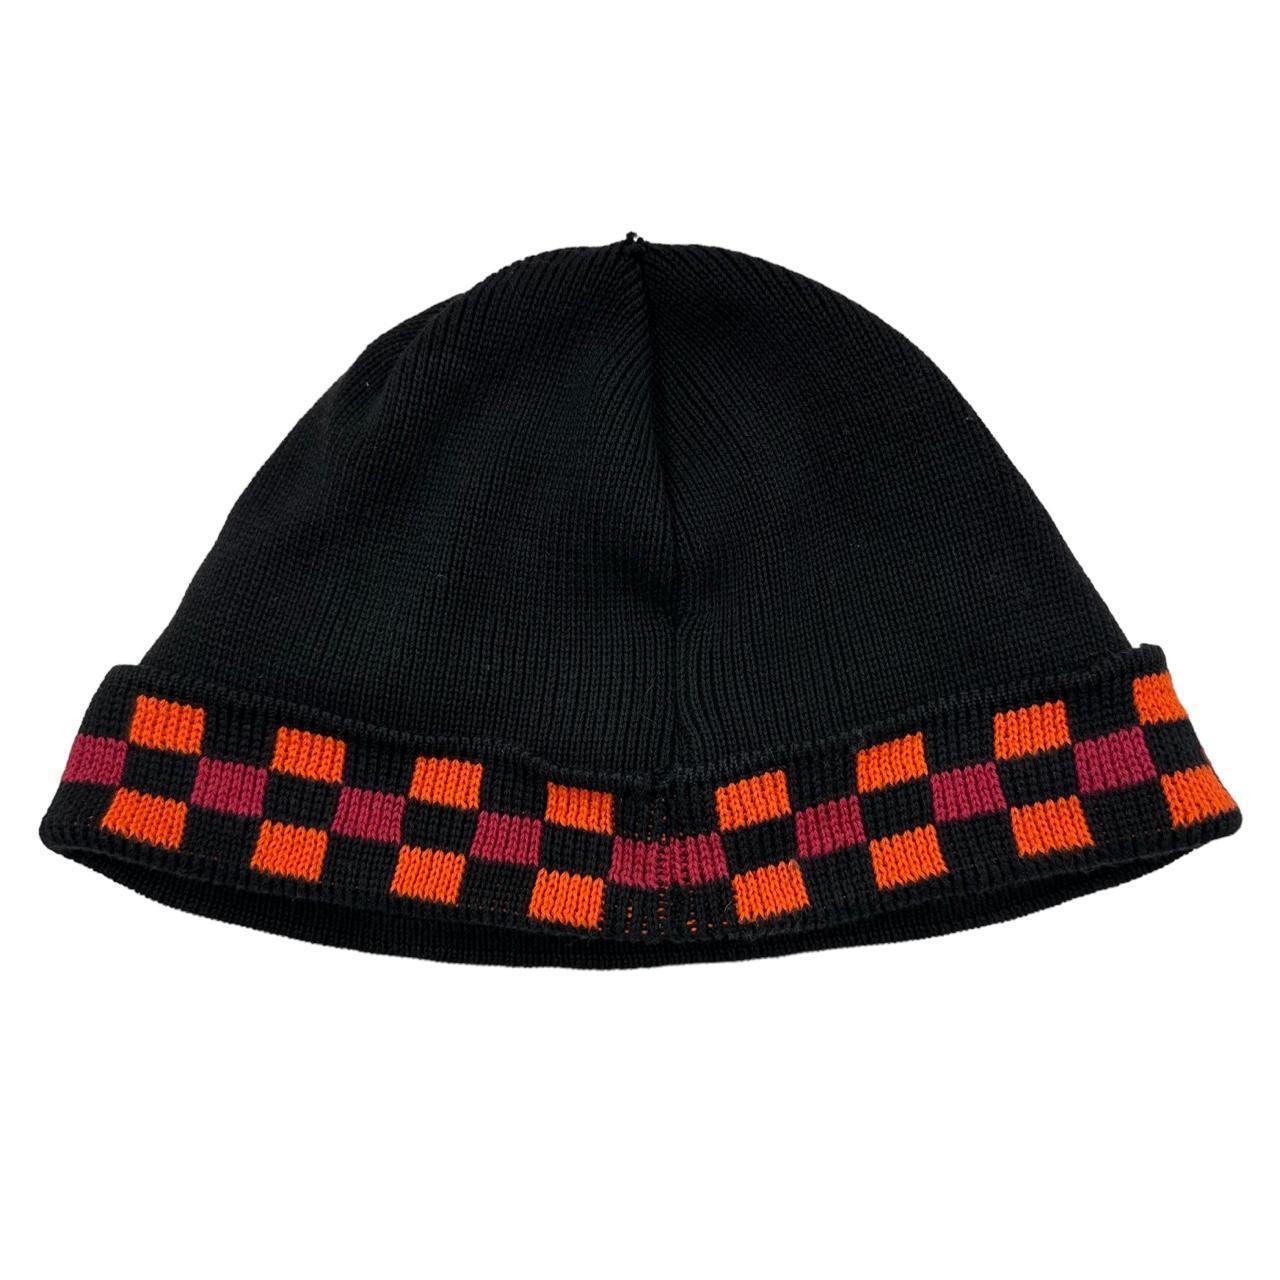 Vintage JPG Jean Paul Gaultier Knitted Beanie Hat - Known Source